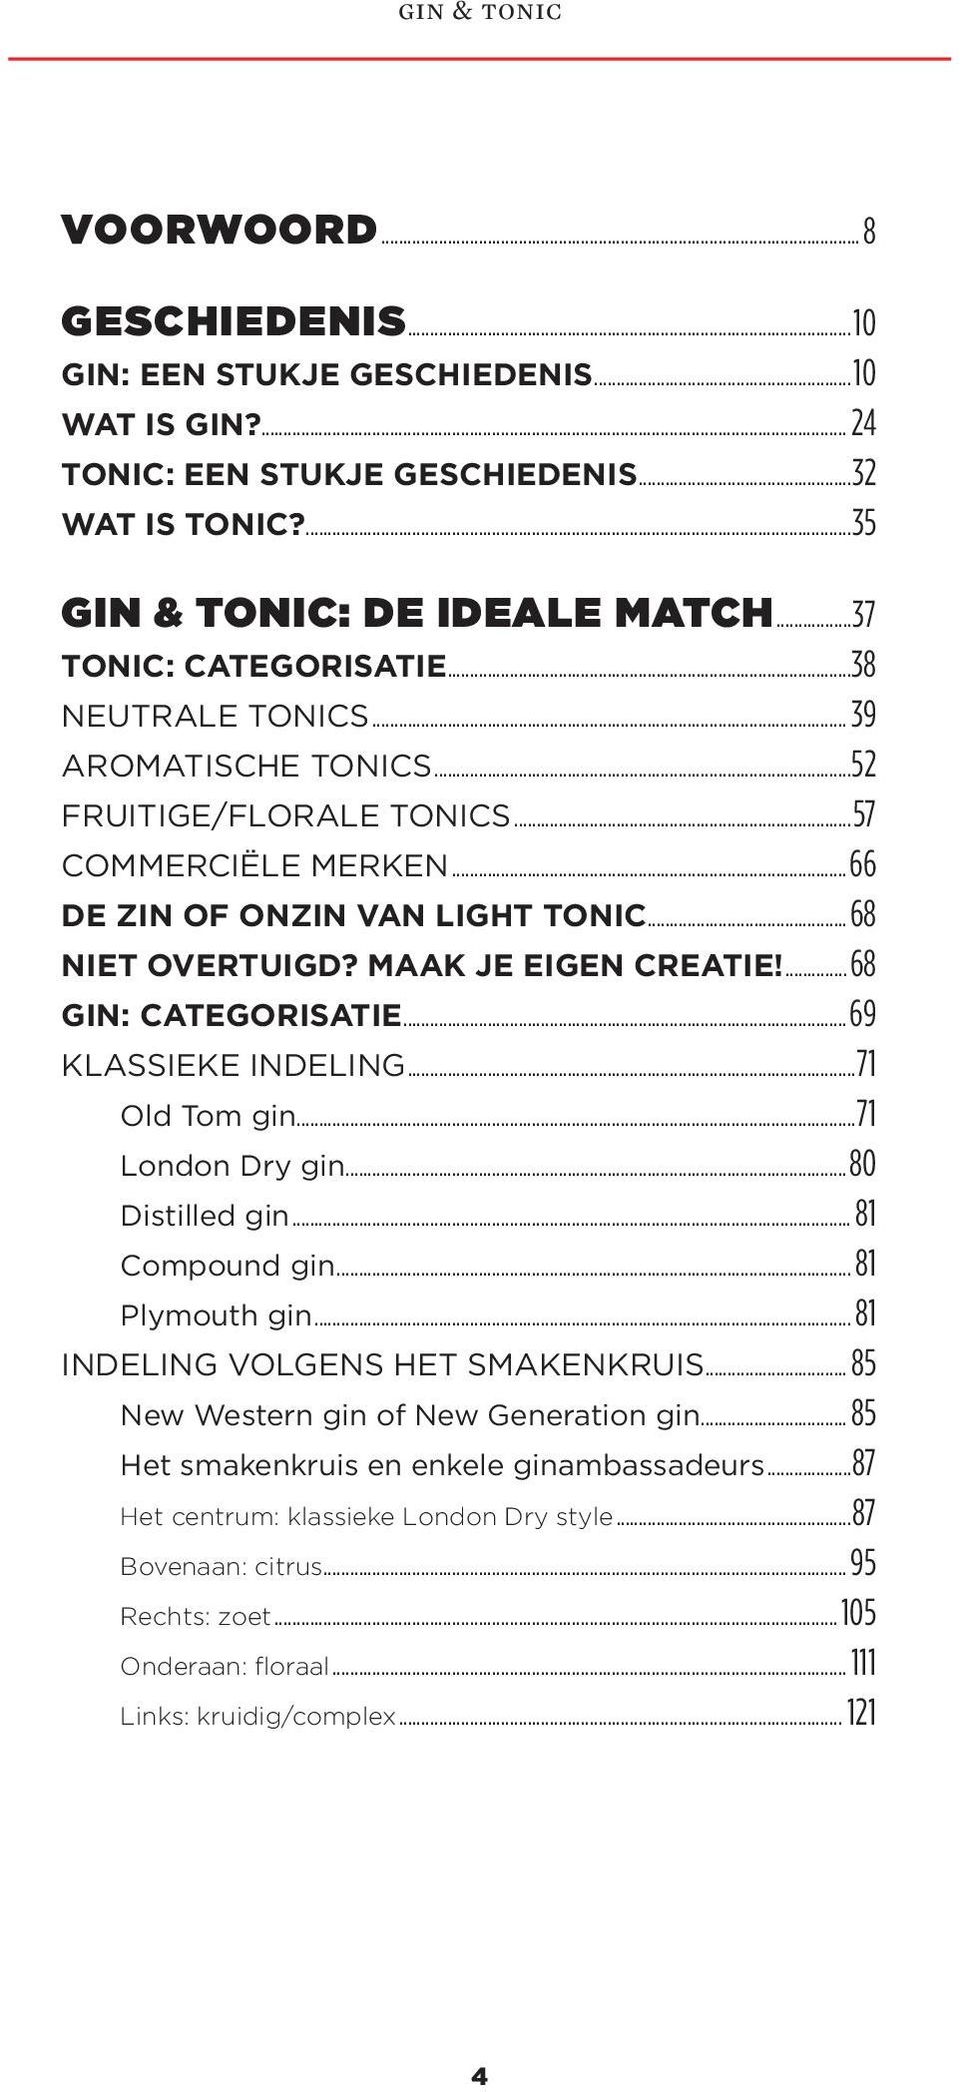 Maak je eigen creatie!...68 Gin: categorisatie...69 Klassieke indeling...71 Old Tom gin...71 London Dry gin...80 Distilled gin... 81 Compound gin... 81 Plymouth gin.